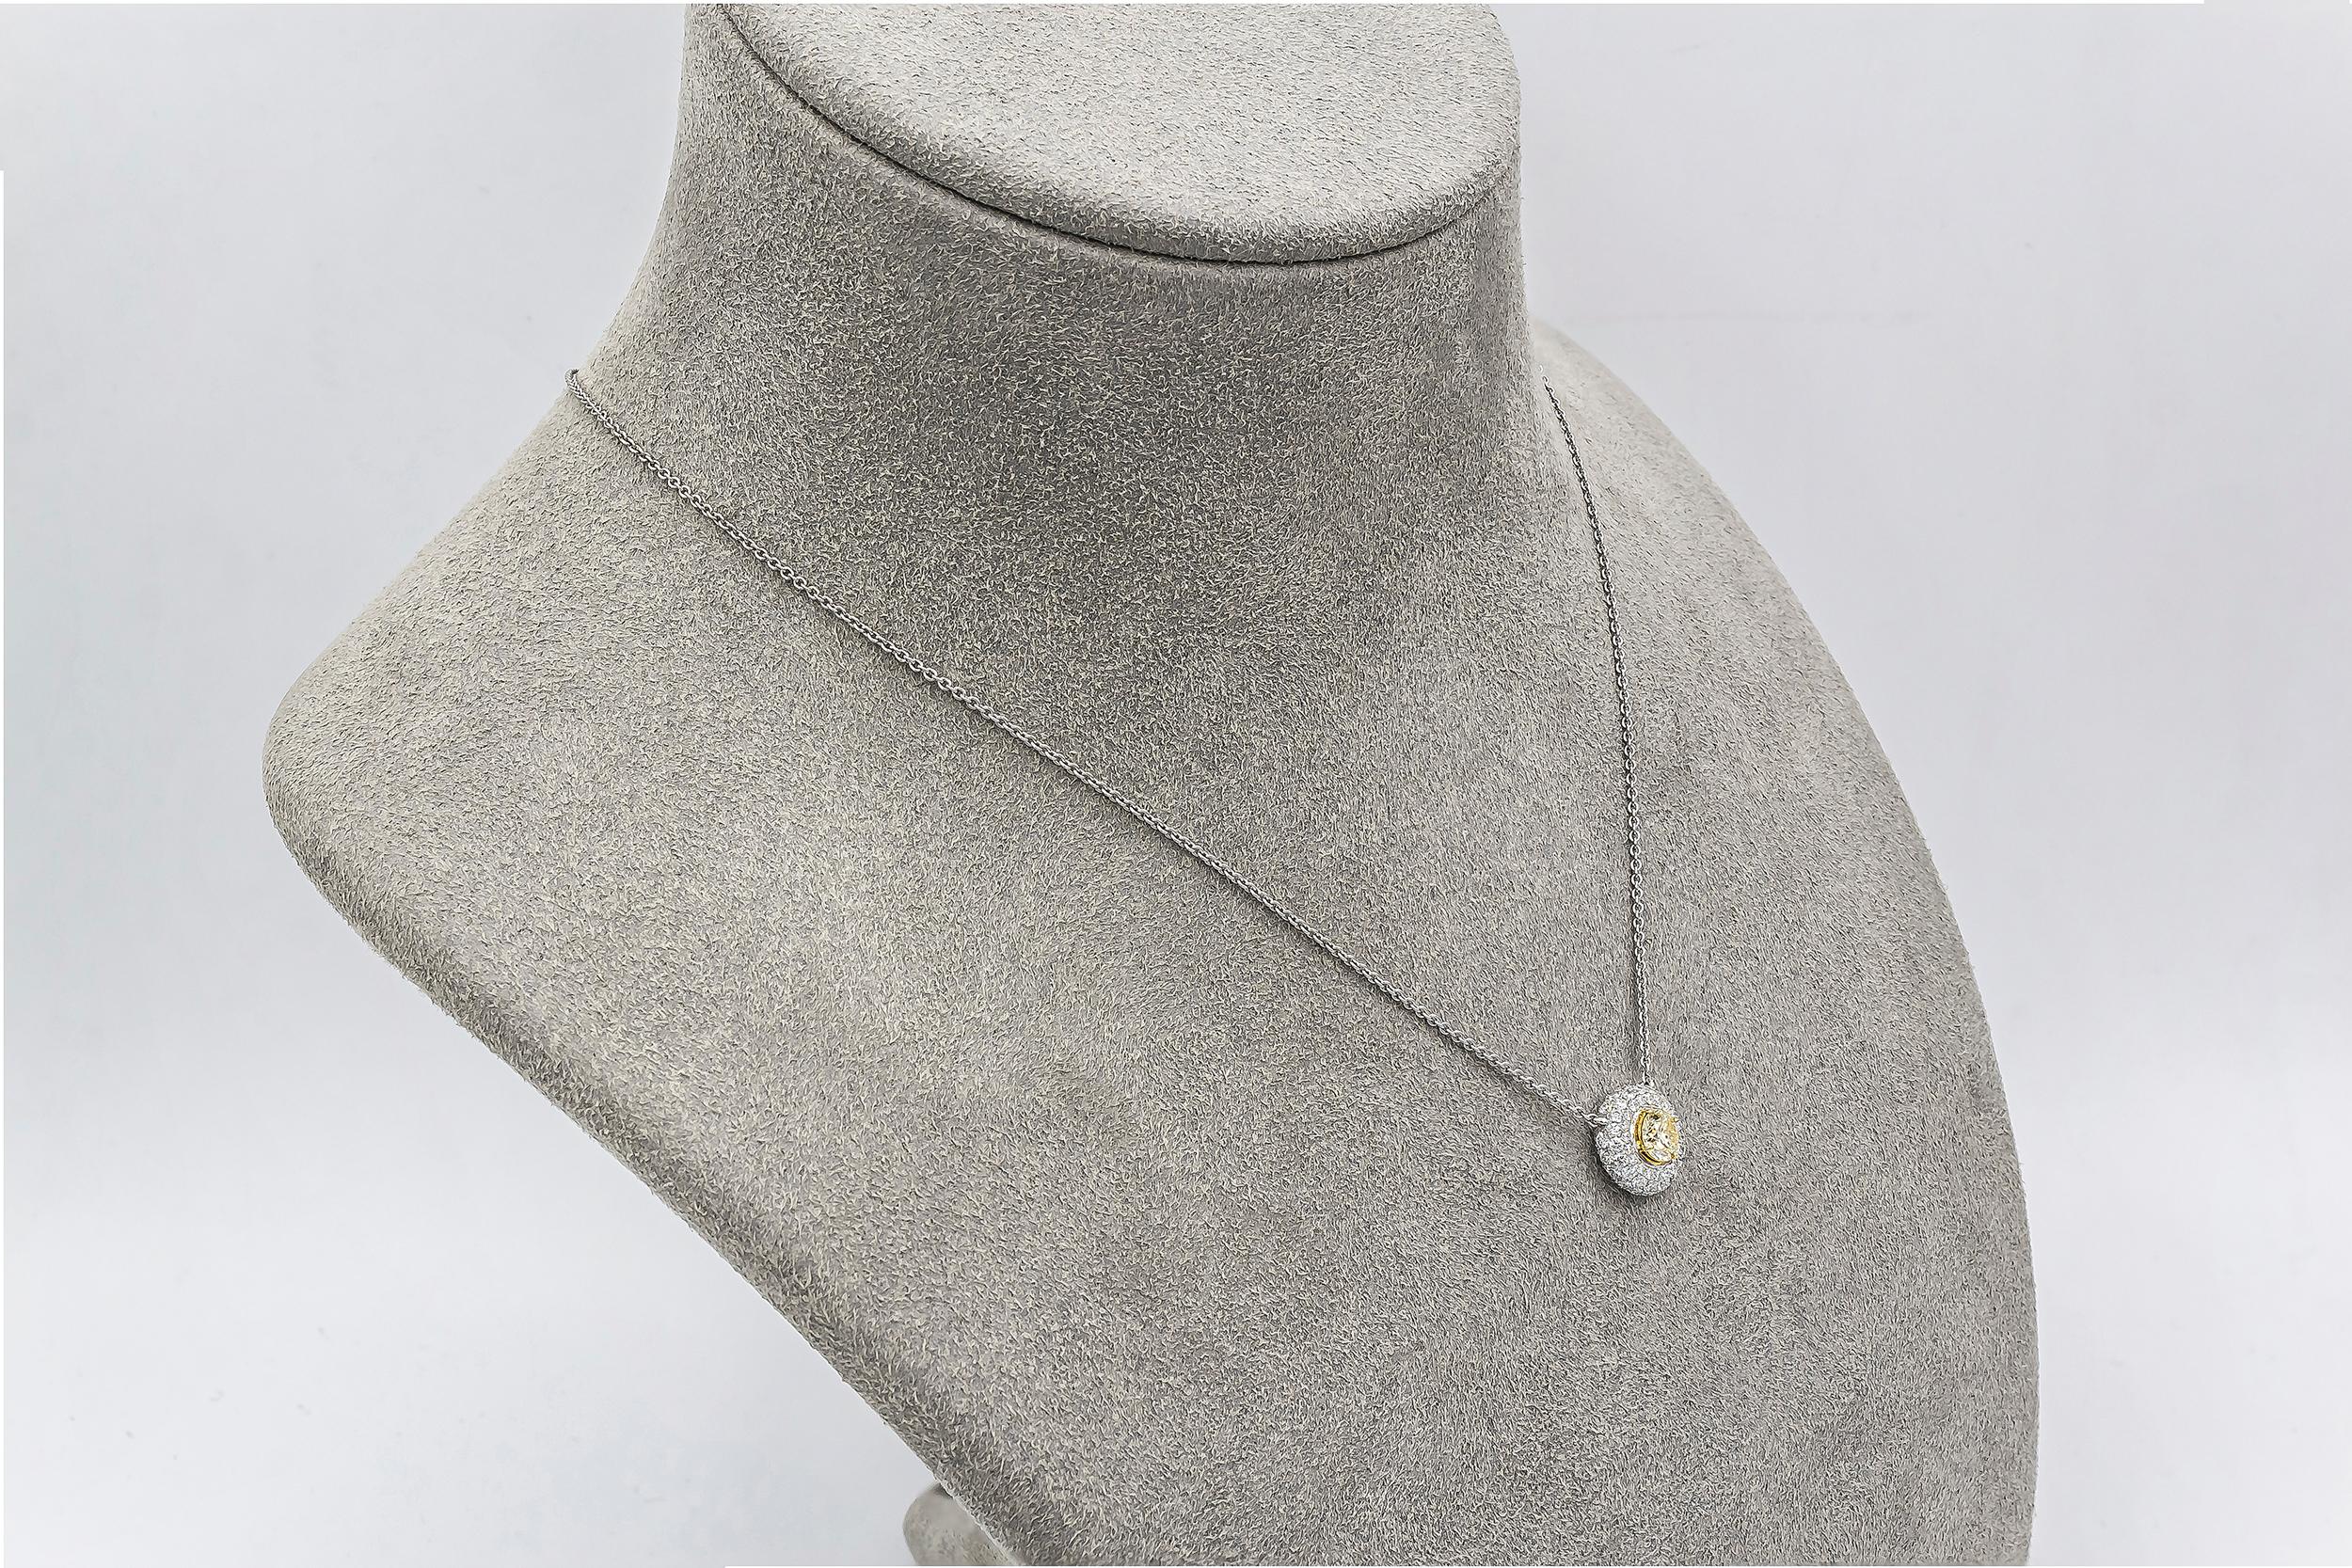 Roman Malakov 0.42 Carats Round Fancy Yellow Diamond Halo Pendant Necklace For Sale 2